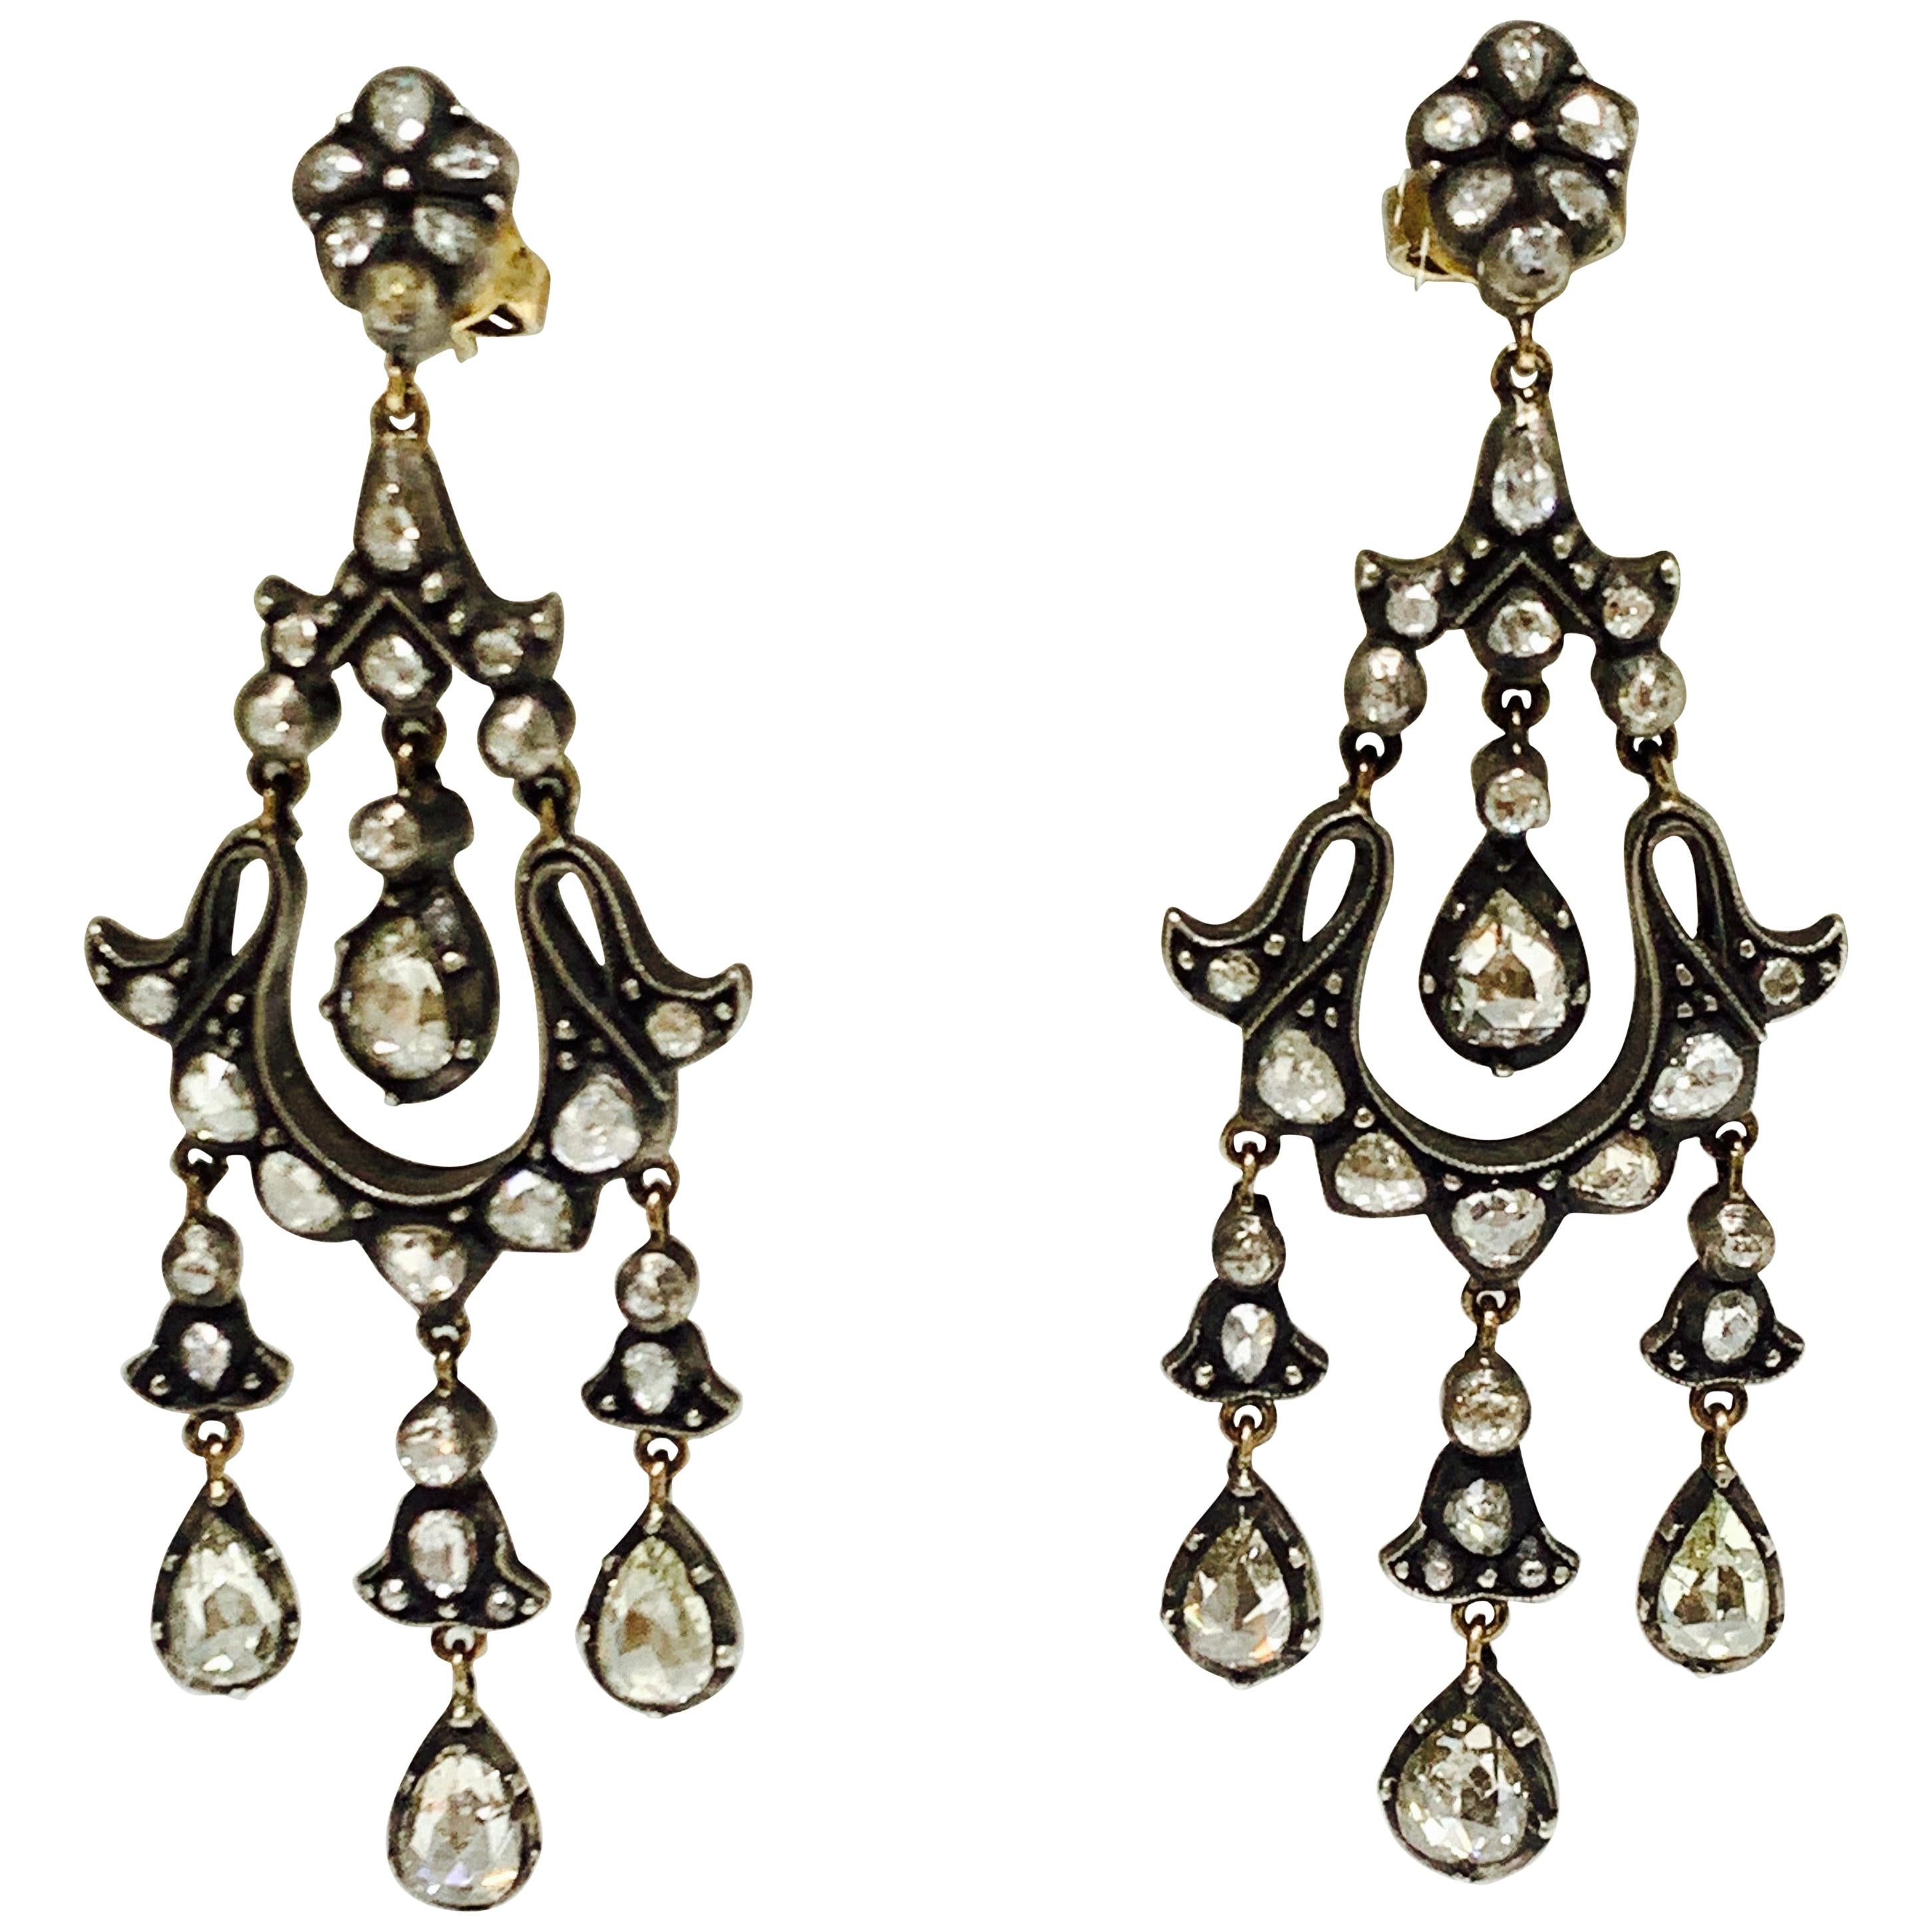 6 Karat Diamant im Rosenschliff Antik-Stil Kronleuchter-Ohrringe in 18 Karat Gold